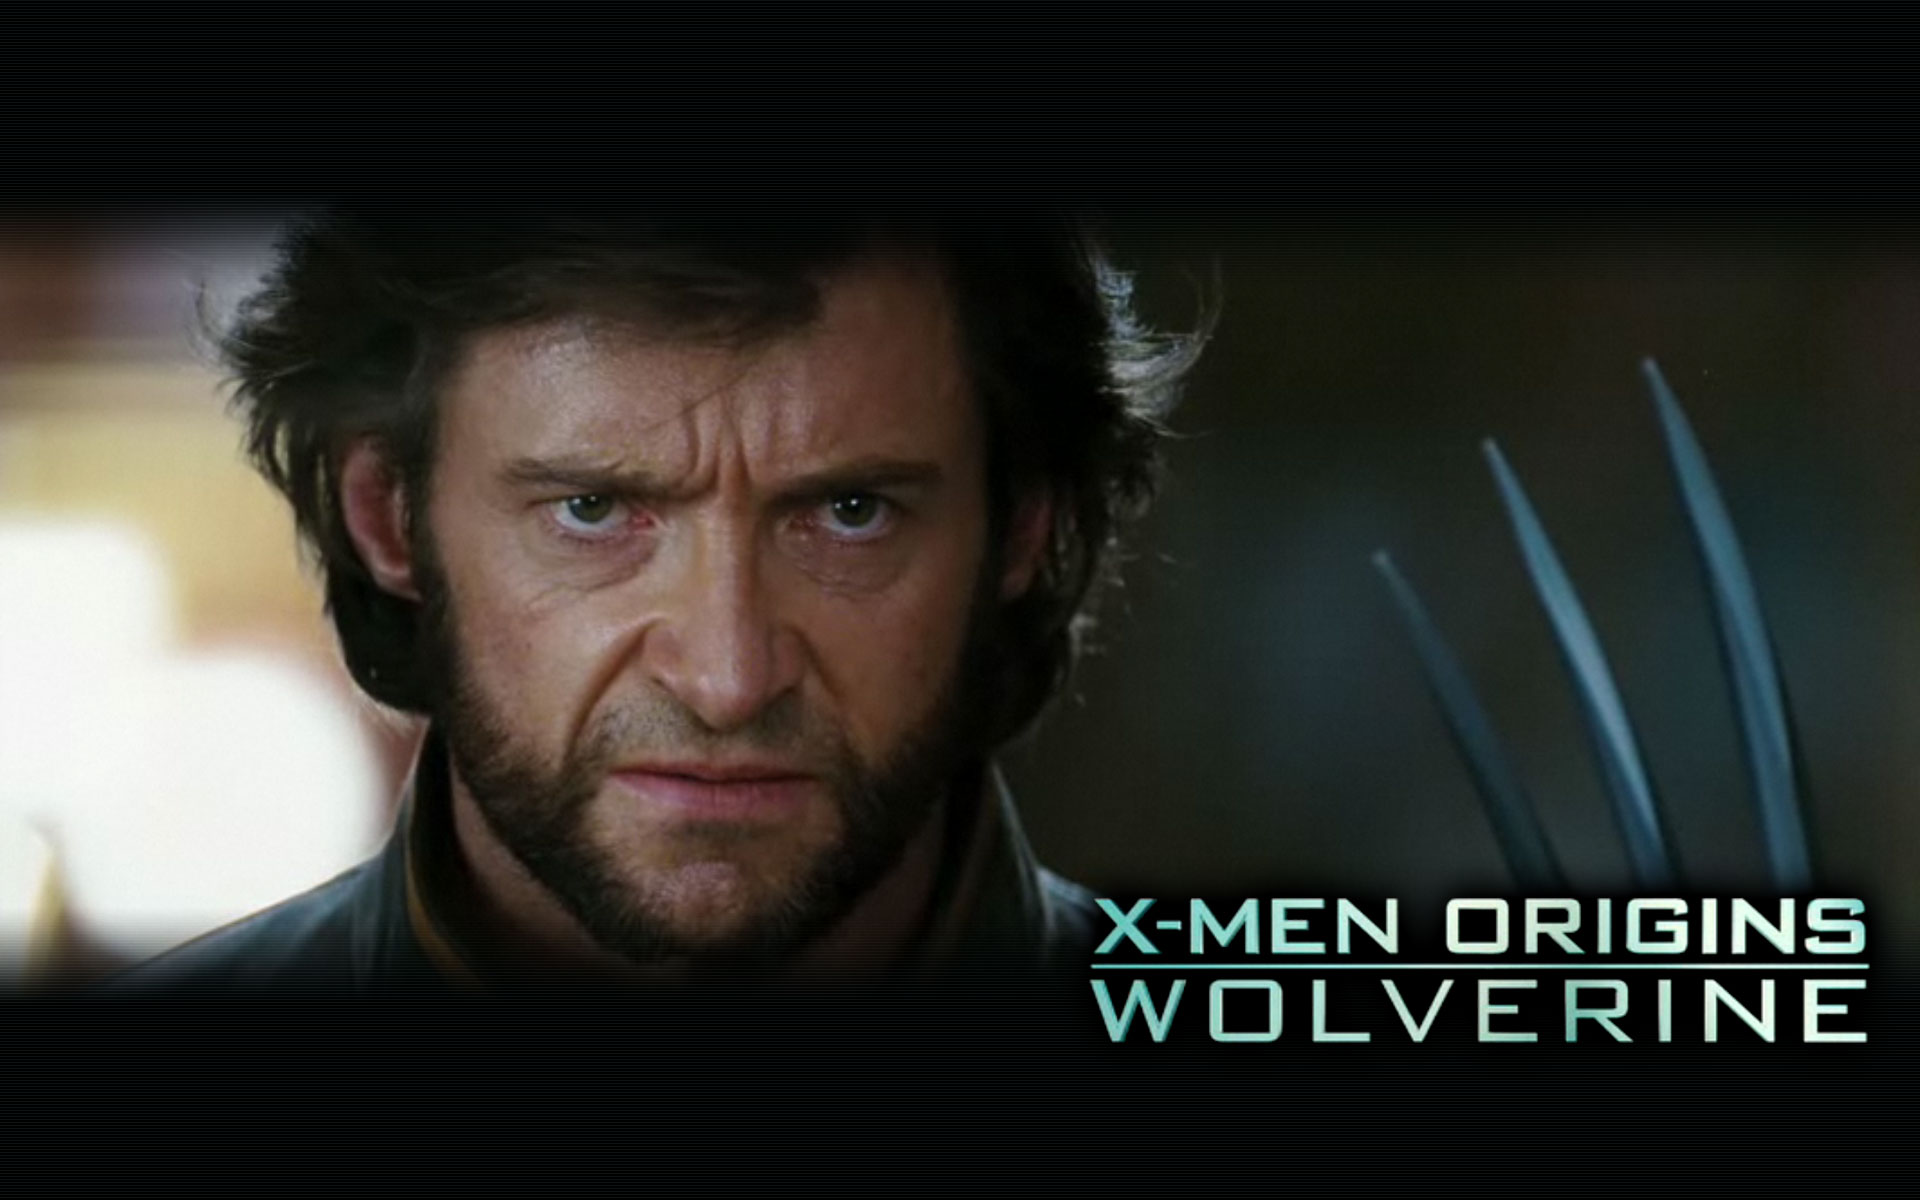 Men Origins Wolverine Movie Hq Wallpaper Photo Of Phombo